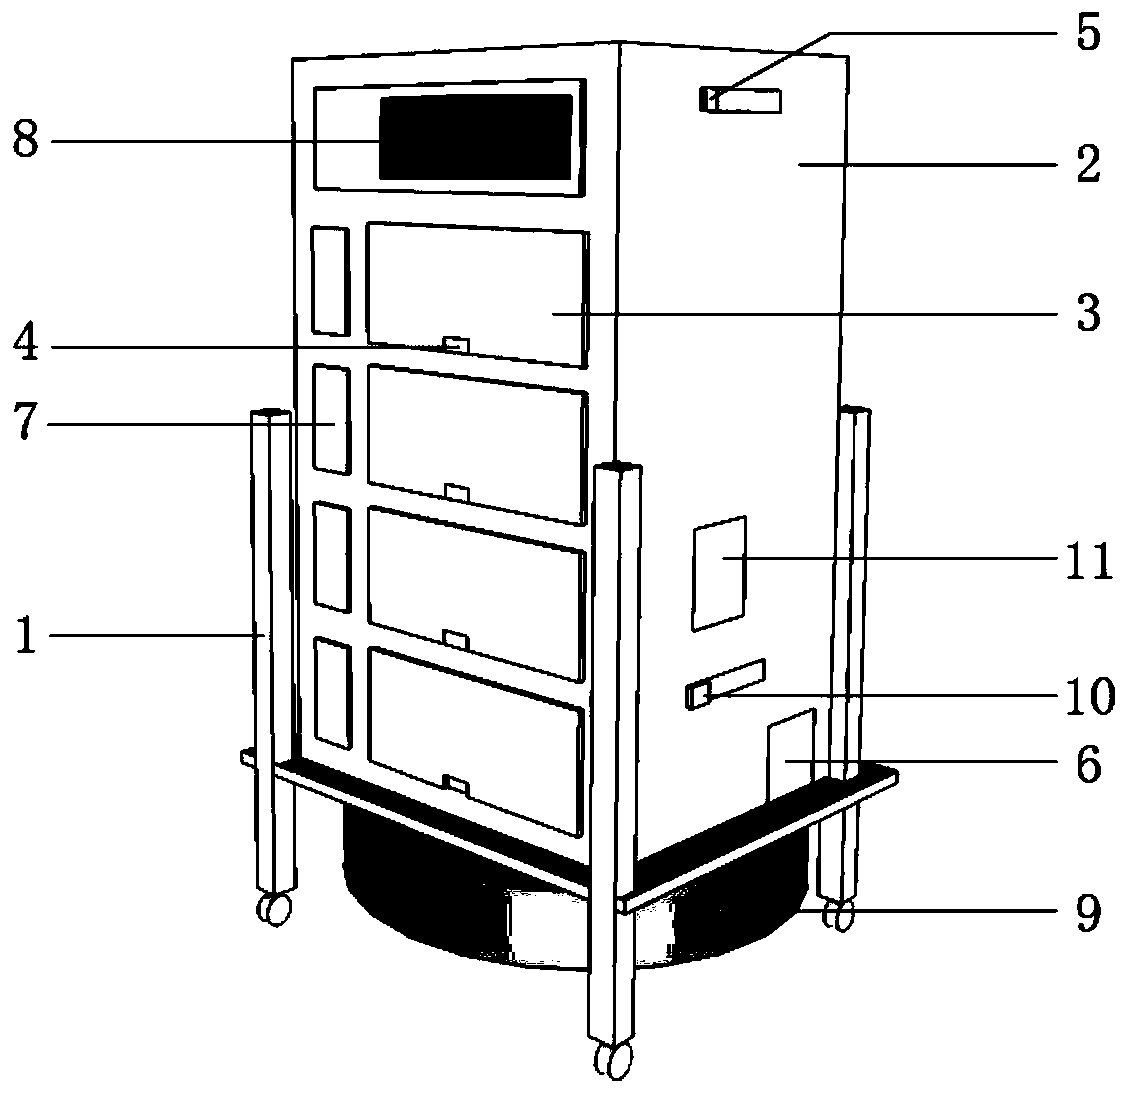 An intelligent distribution system for medical agv trolleys